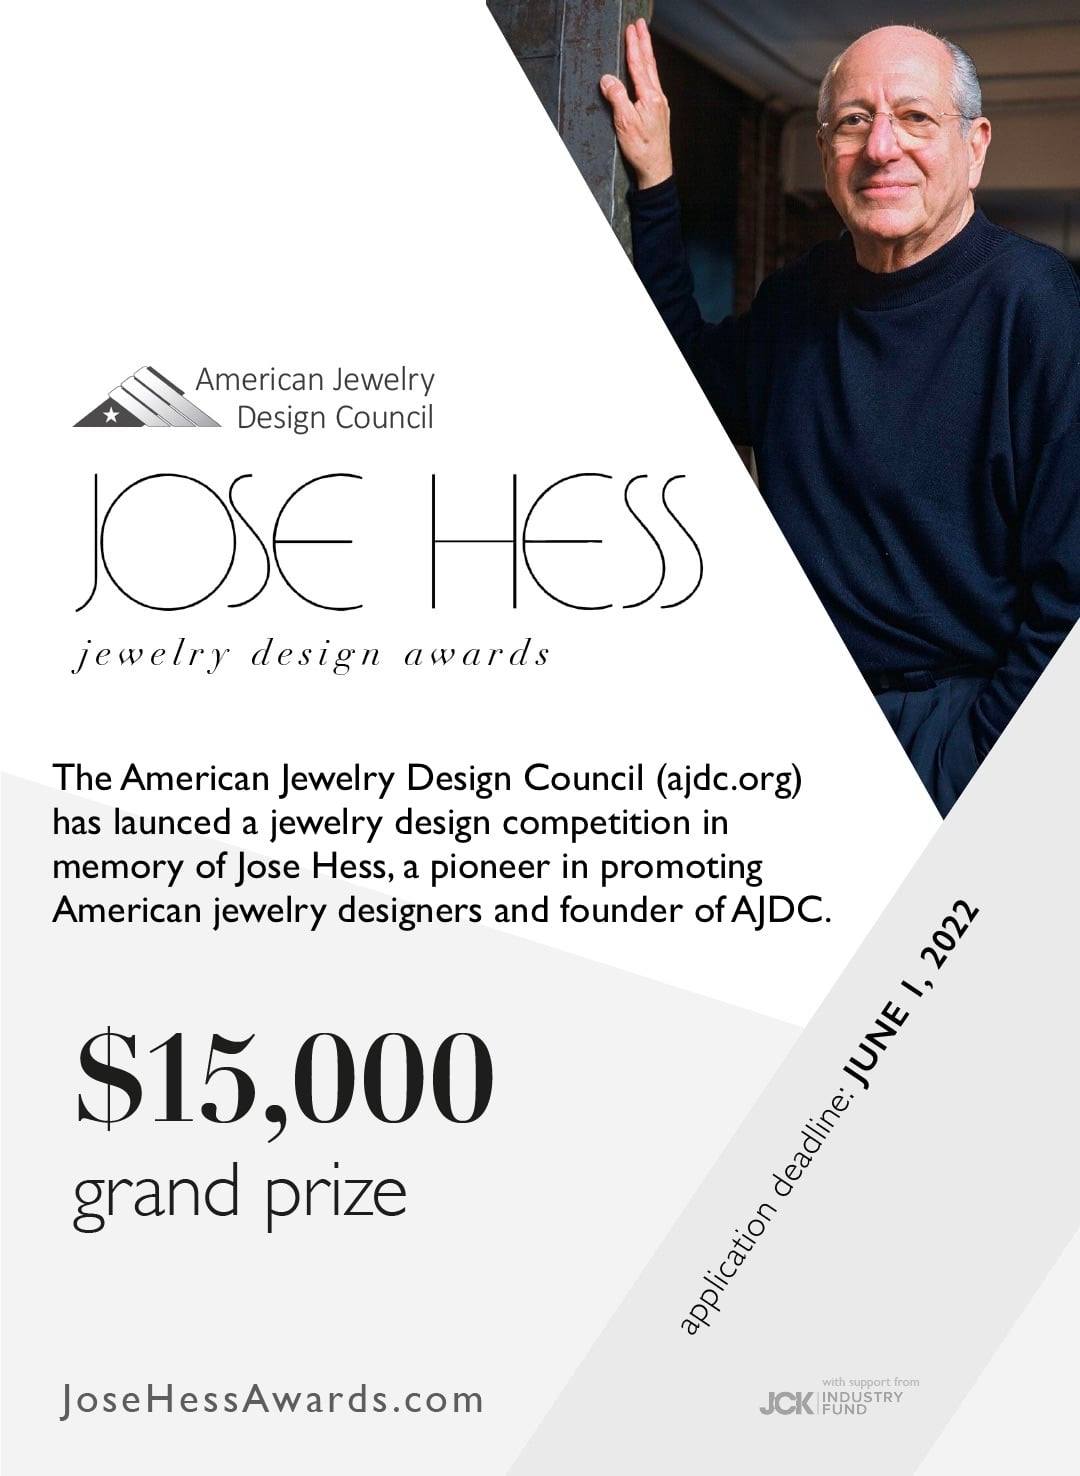 Jose Hess Awards